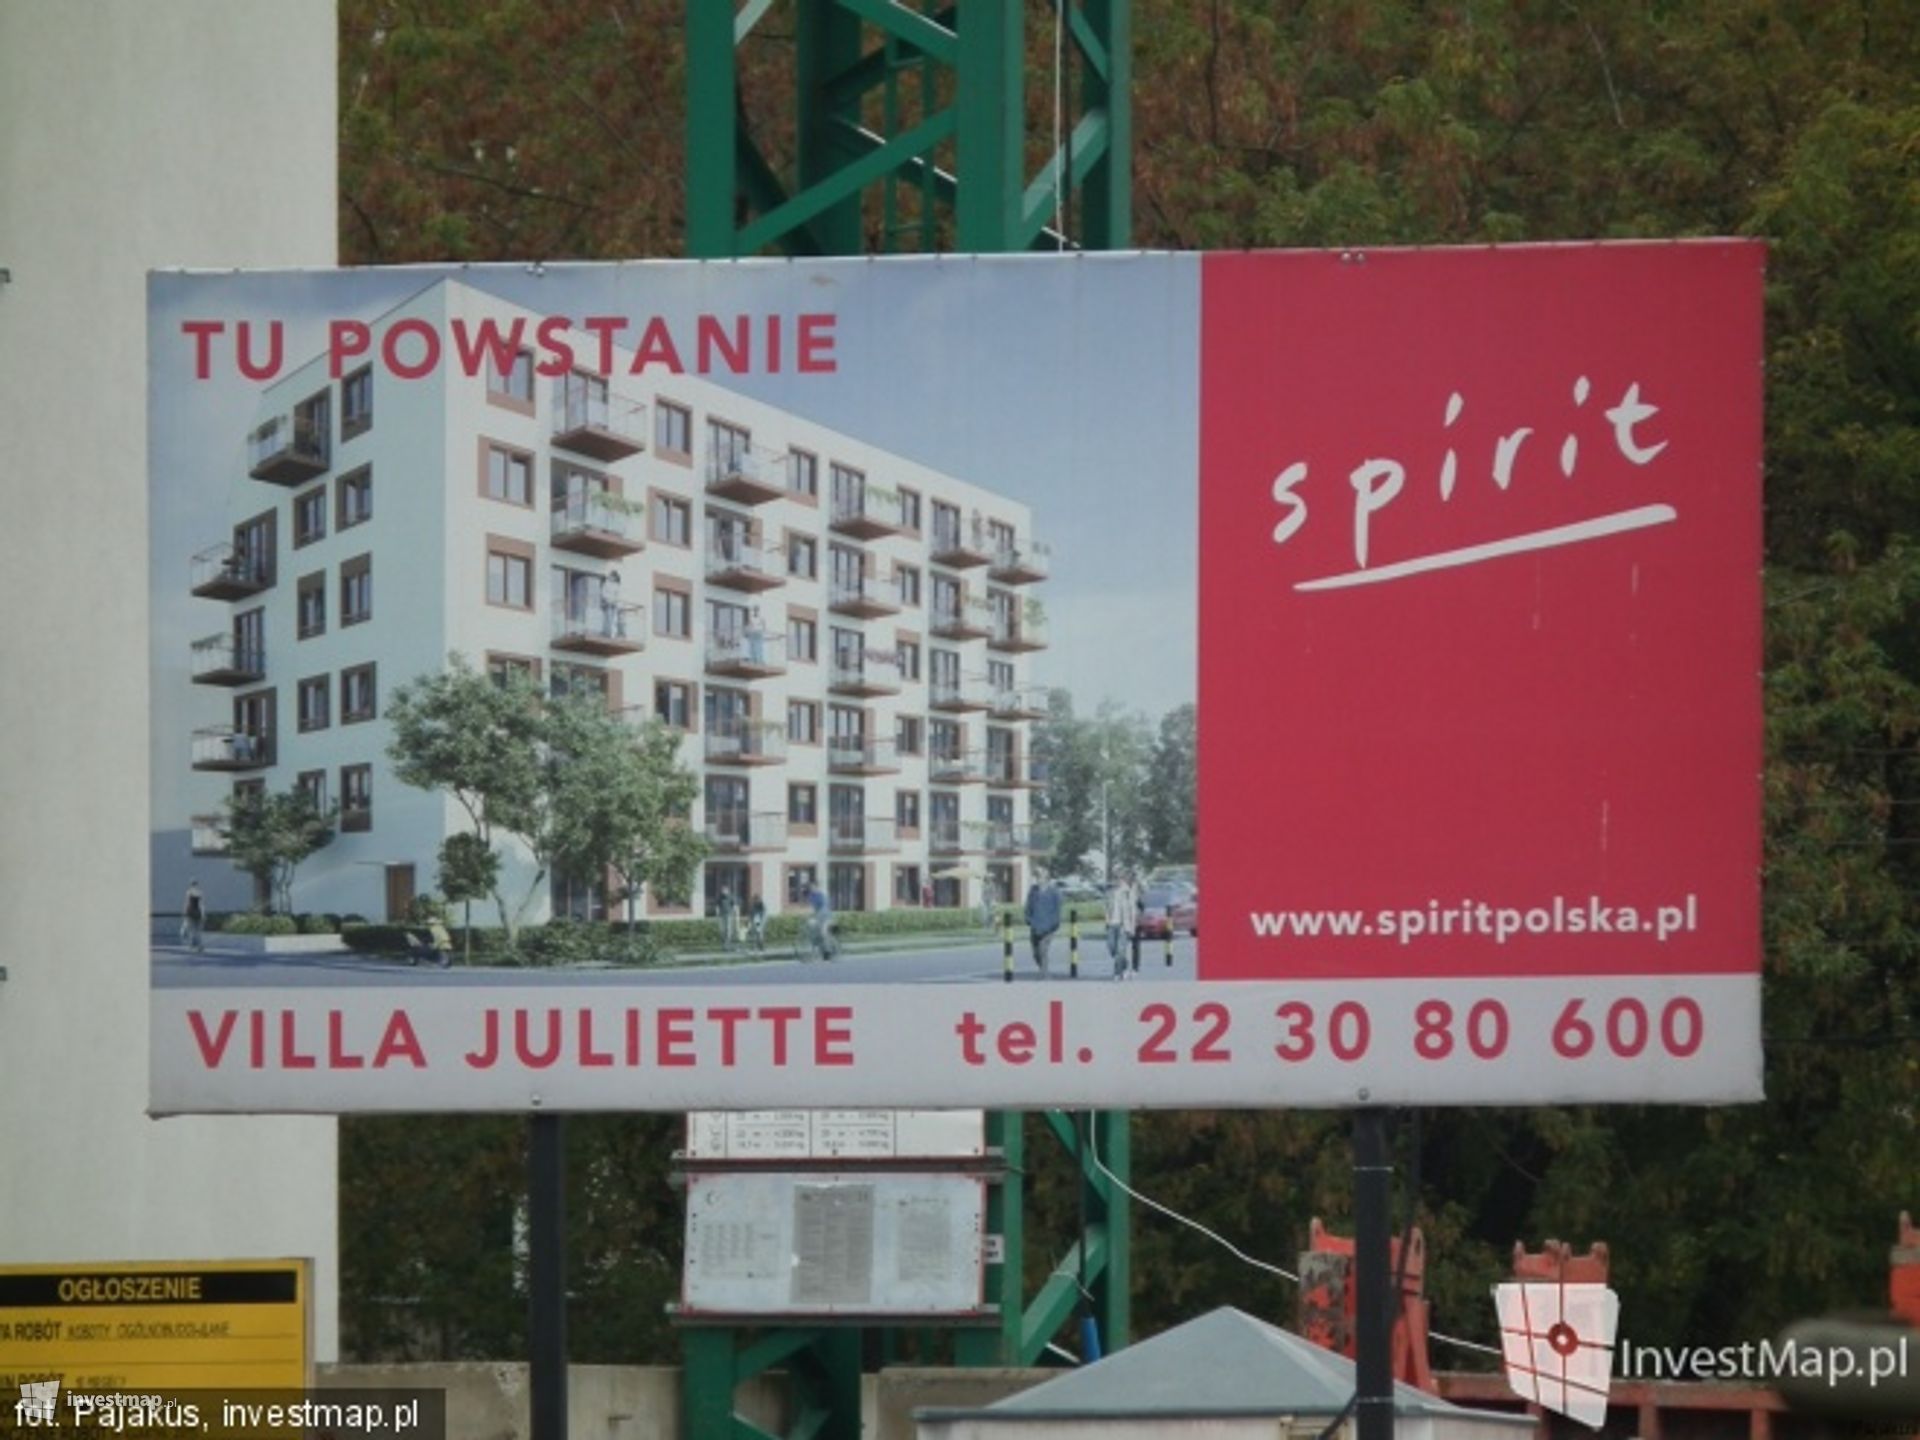 [Warszawa] Budynek wielorodzinny "Villa Juliette"